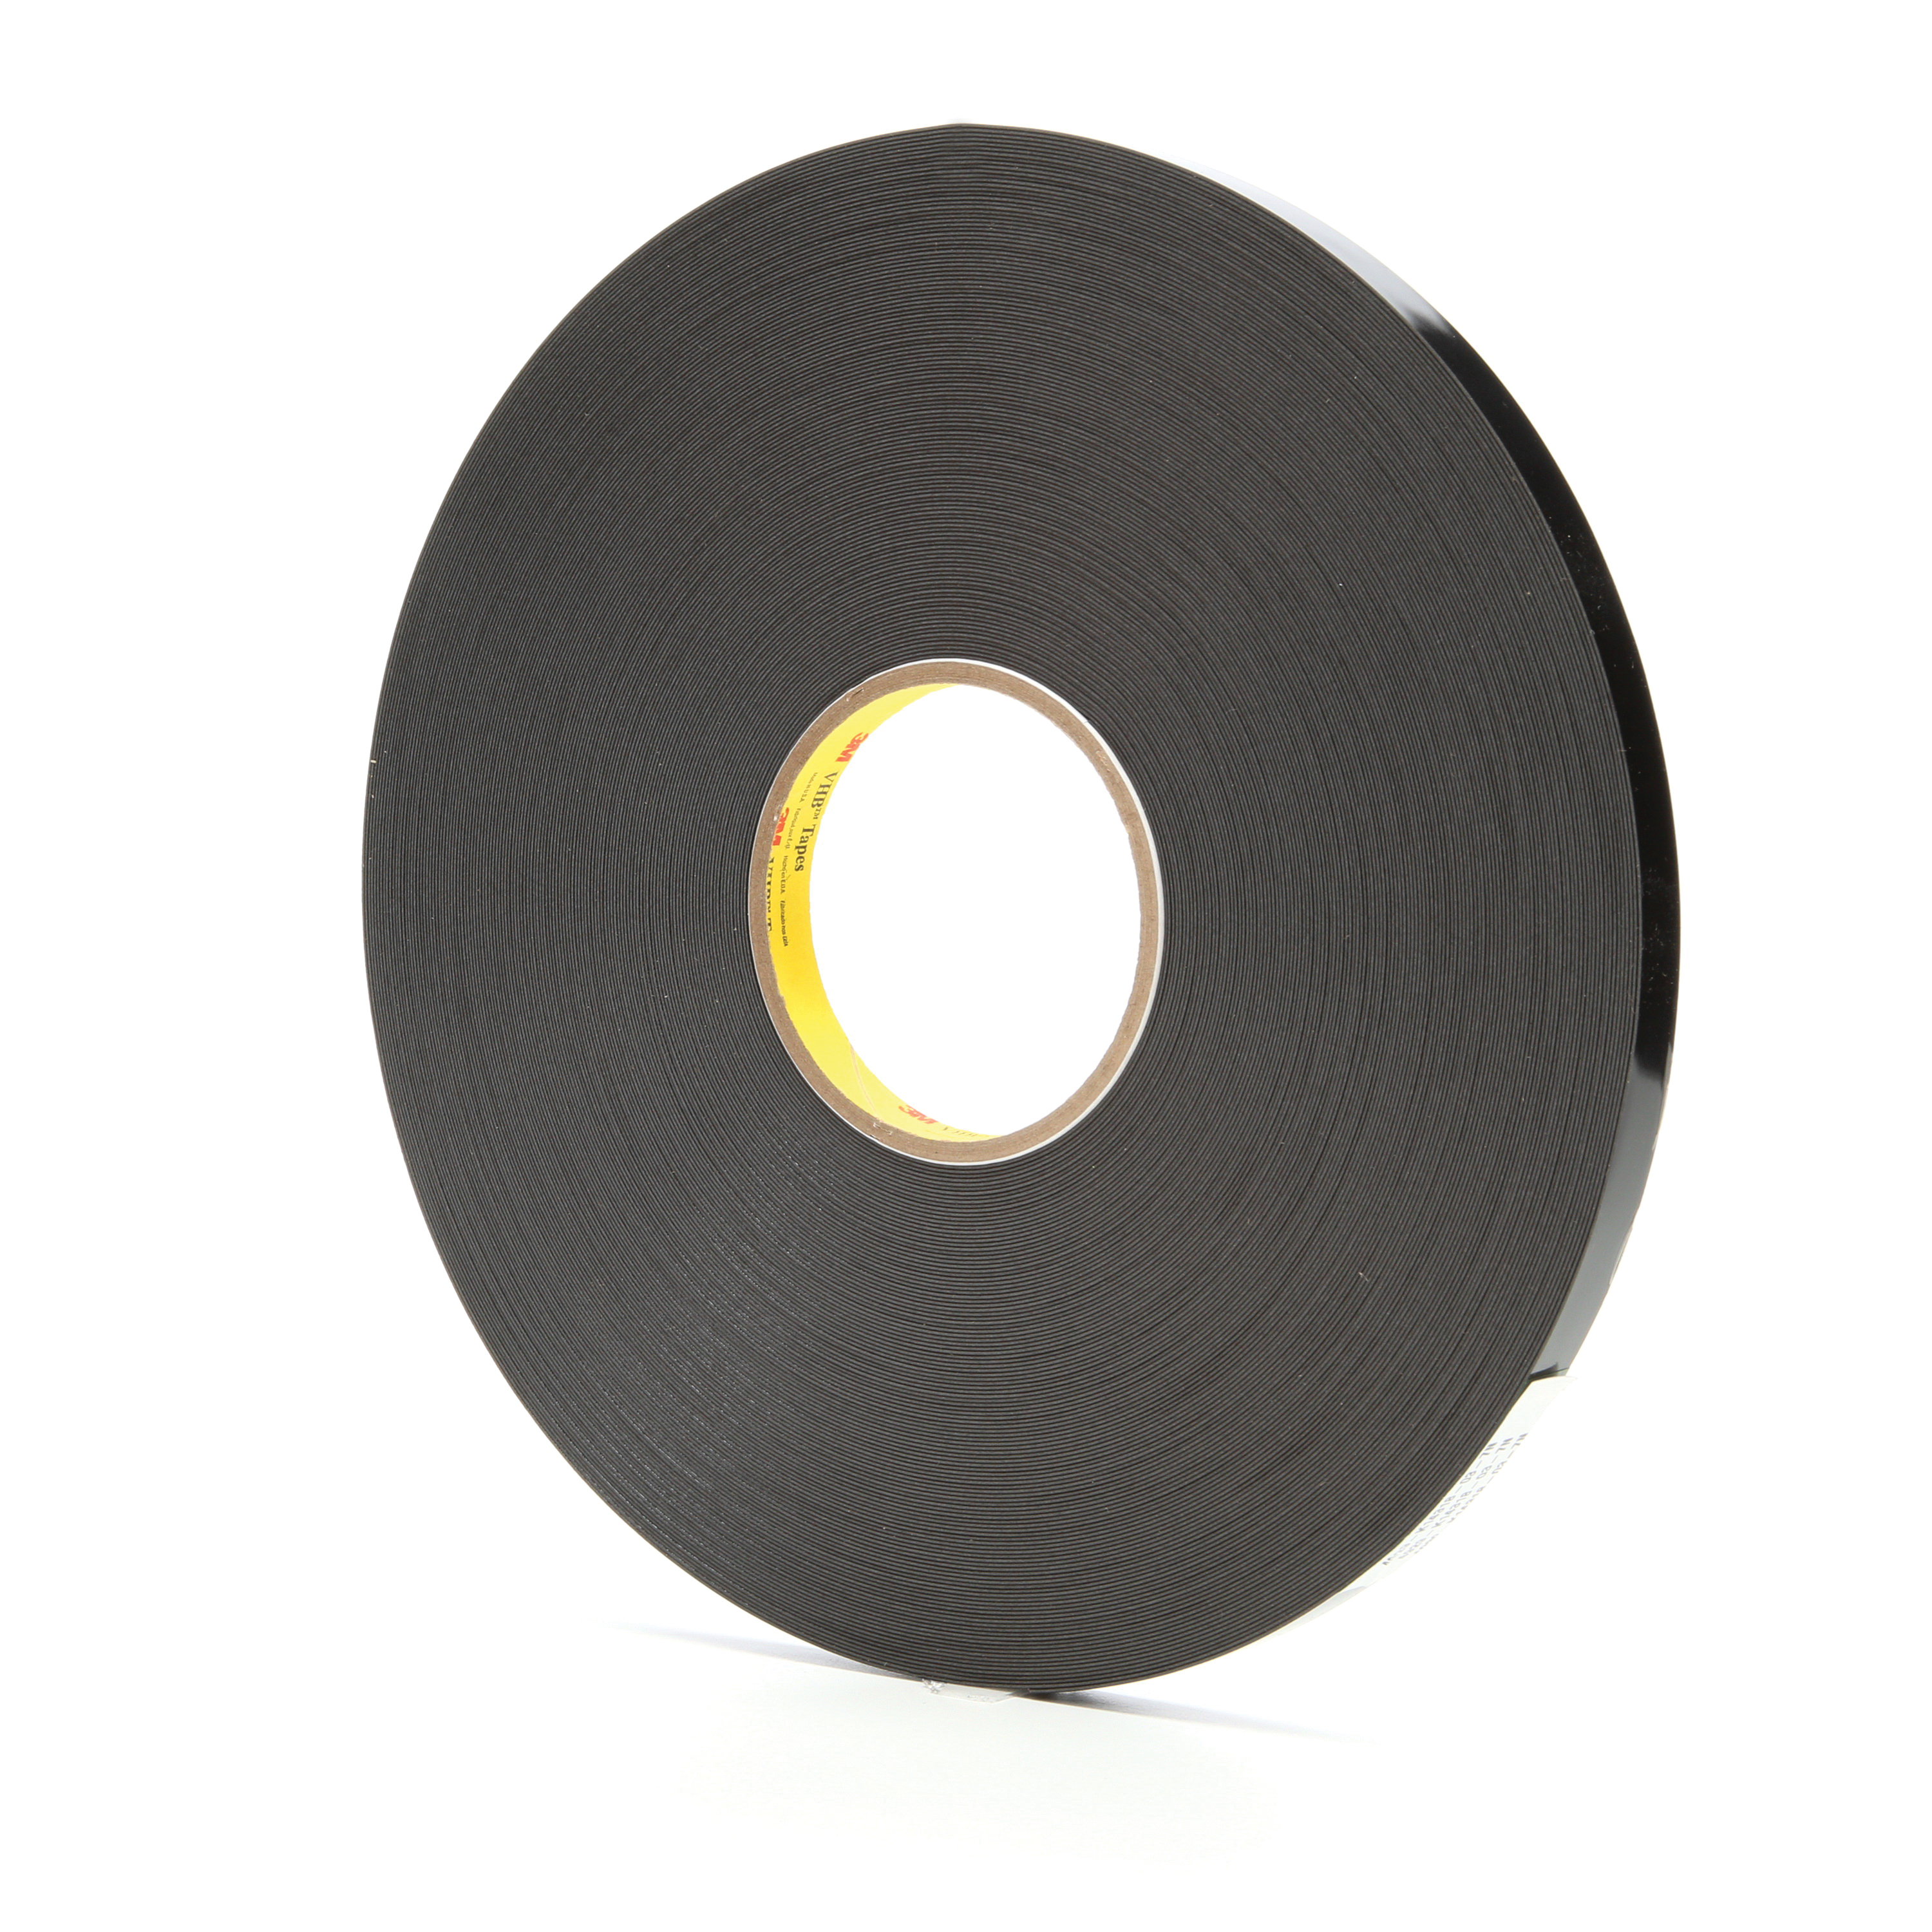 3M™ VHB™ 021200-67491 Pressure Sensitive Double Sided Bonding Tape, 72 yd L x 1/2 in W, 0.025 in THK, General Purpose Acrylic Adhesive, Acrylic Foam Backing, Black